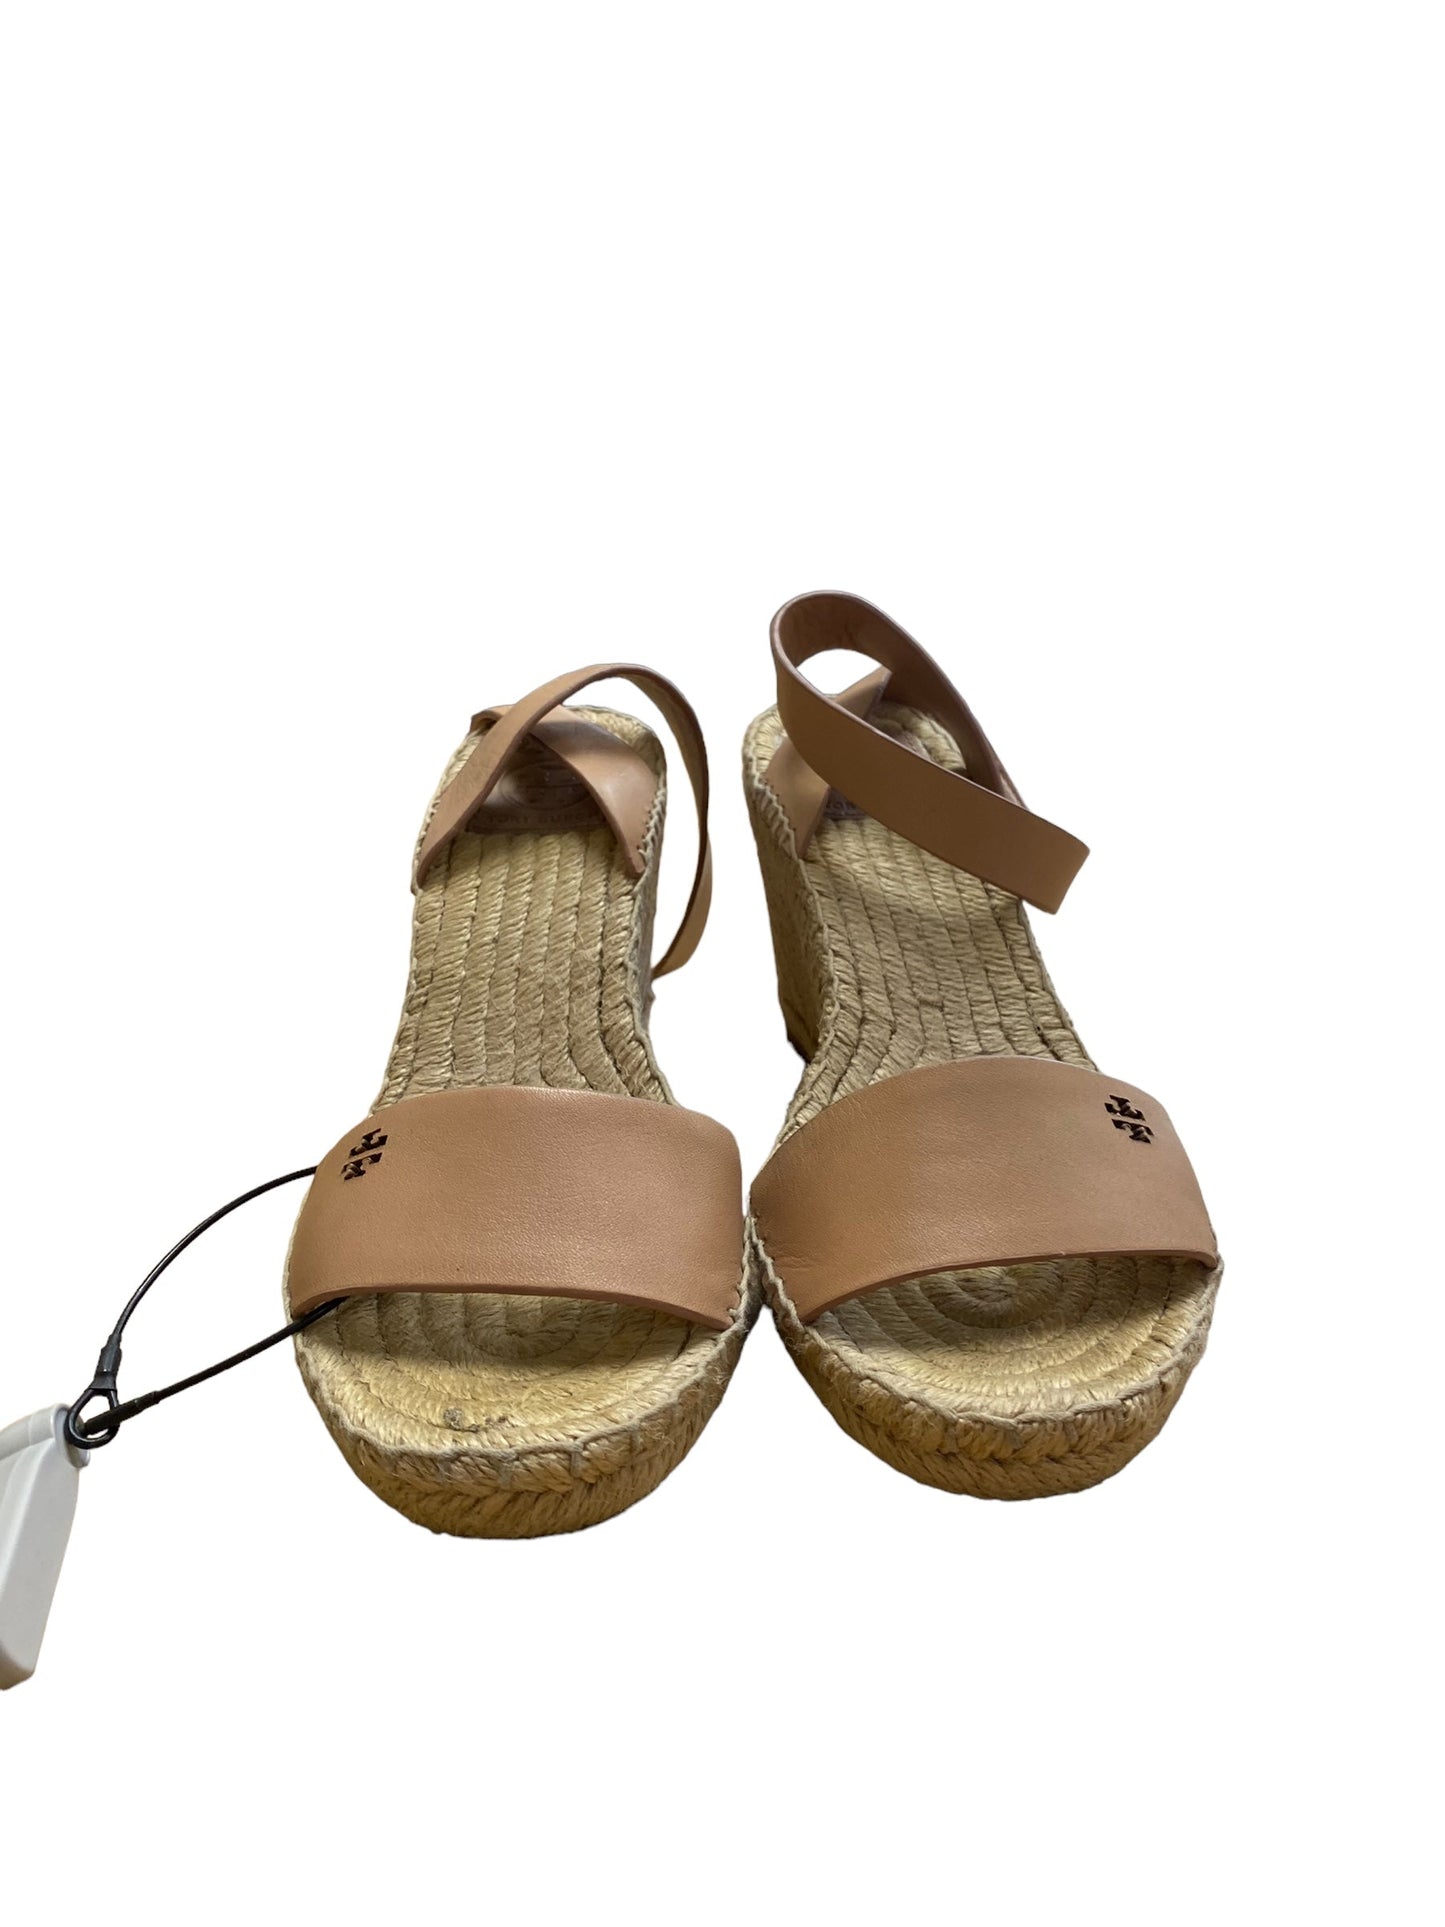 Tan Sandals Heels Wedge Tory Burch, Size 7